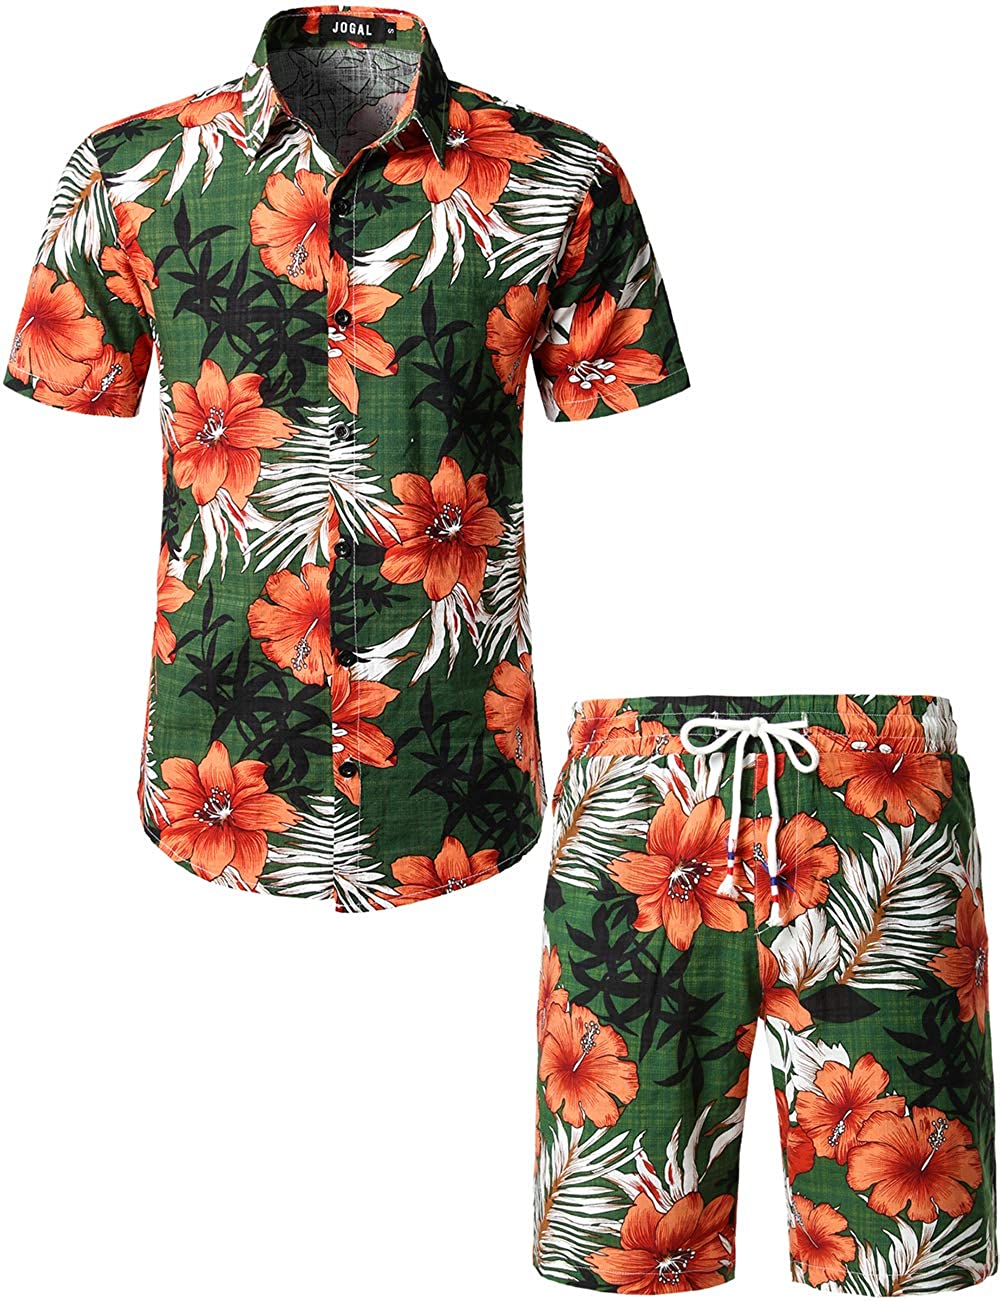 JOGAL Men's Casual Cotton Short Sleeve Button Down Hawaiian Shirt Suits 